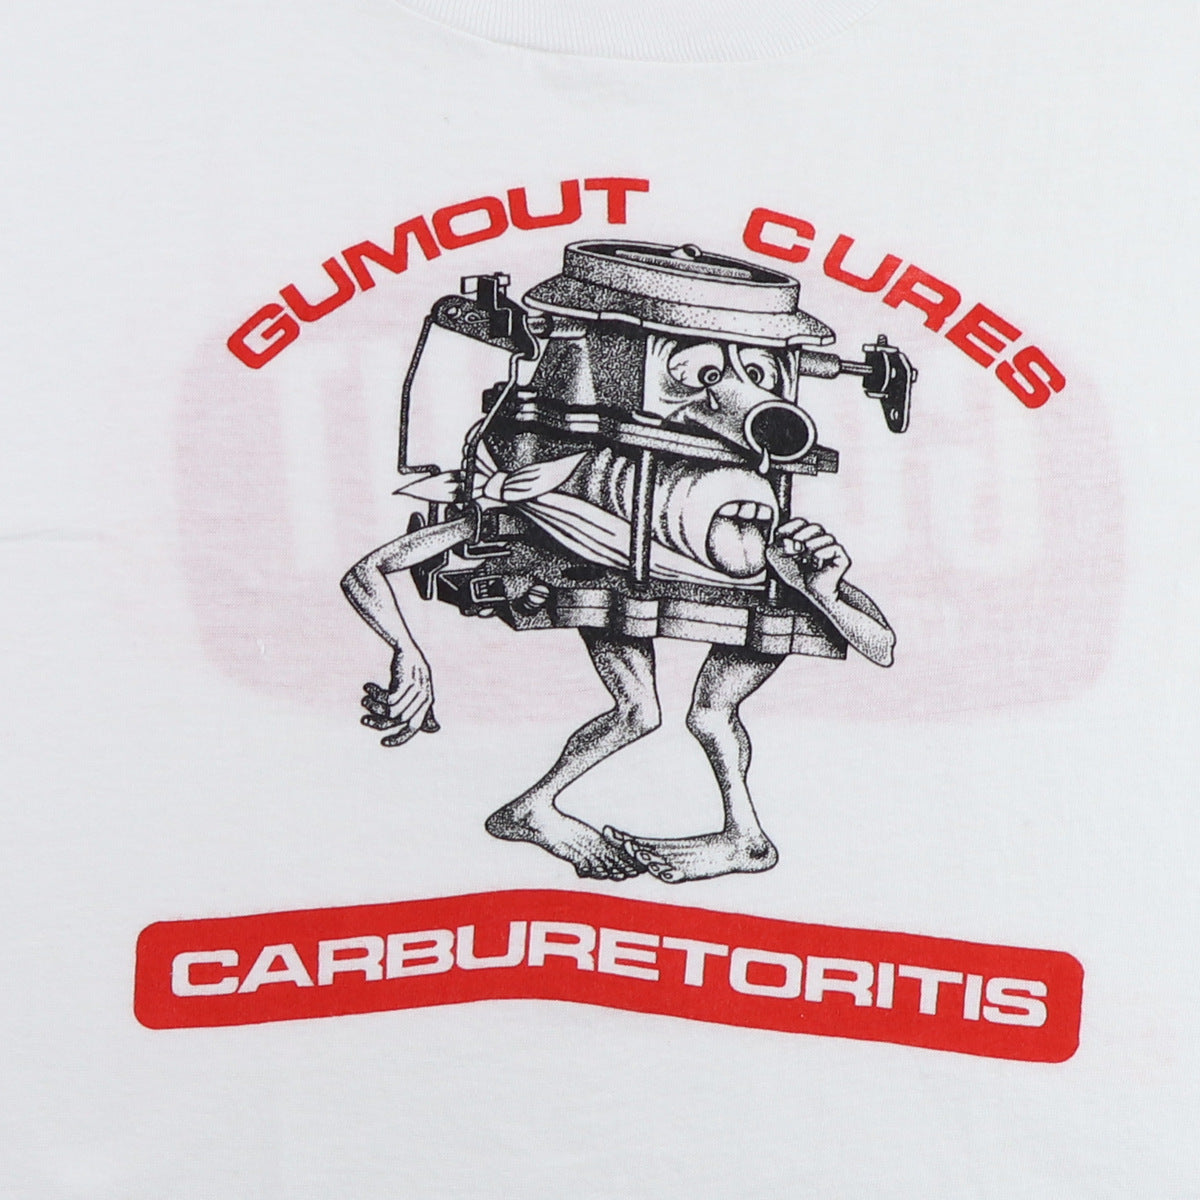 1970s Gumout Carburetor Cleaner Shirt